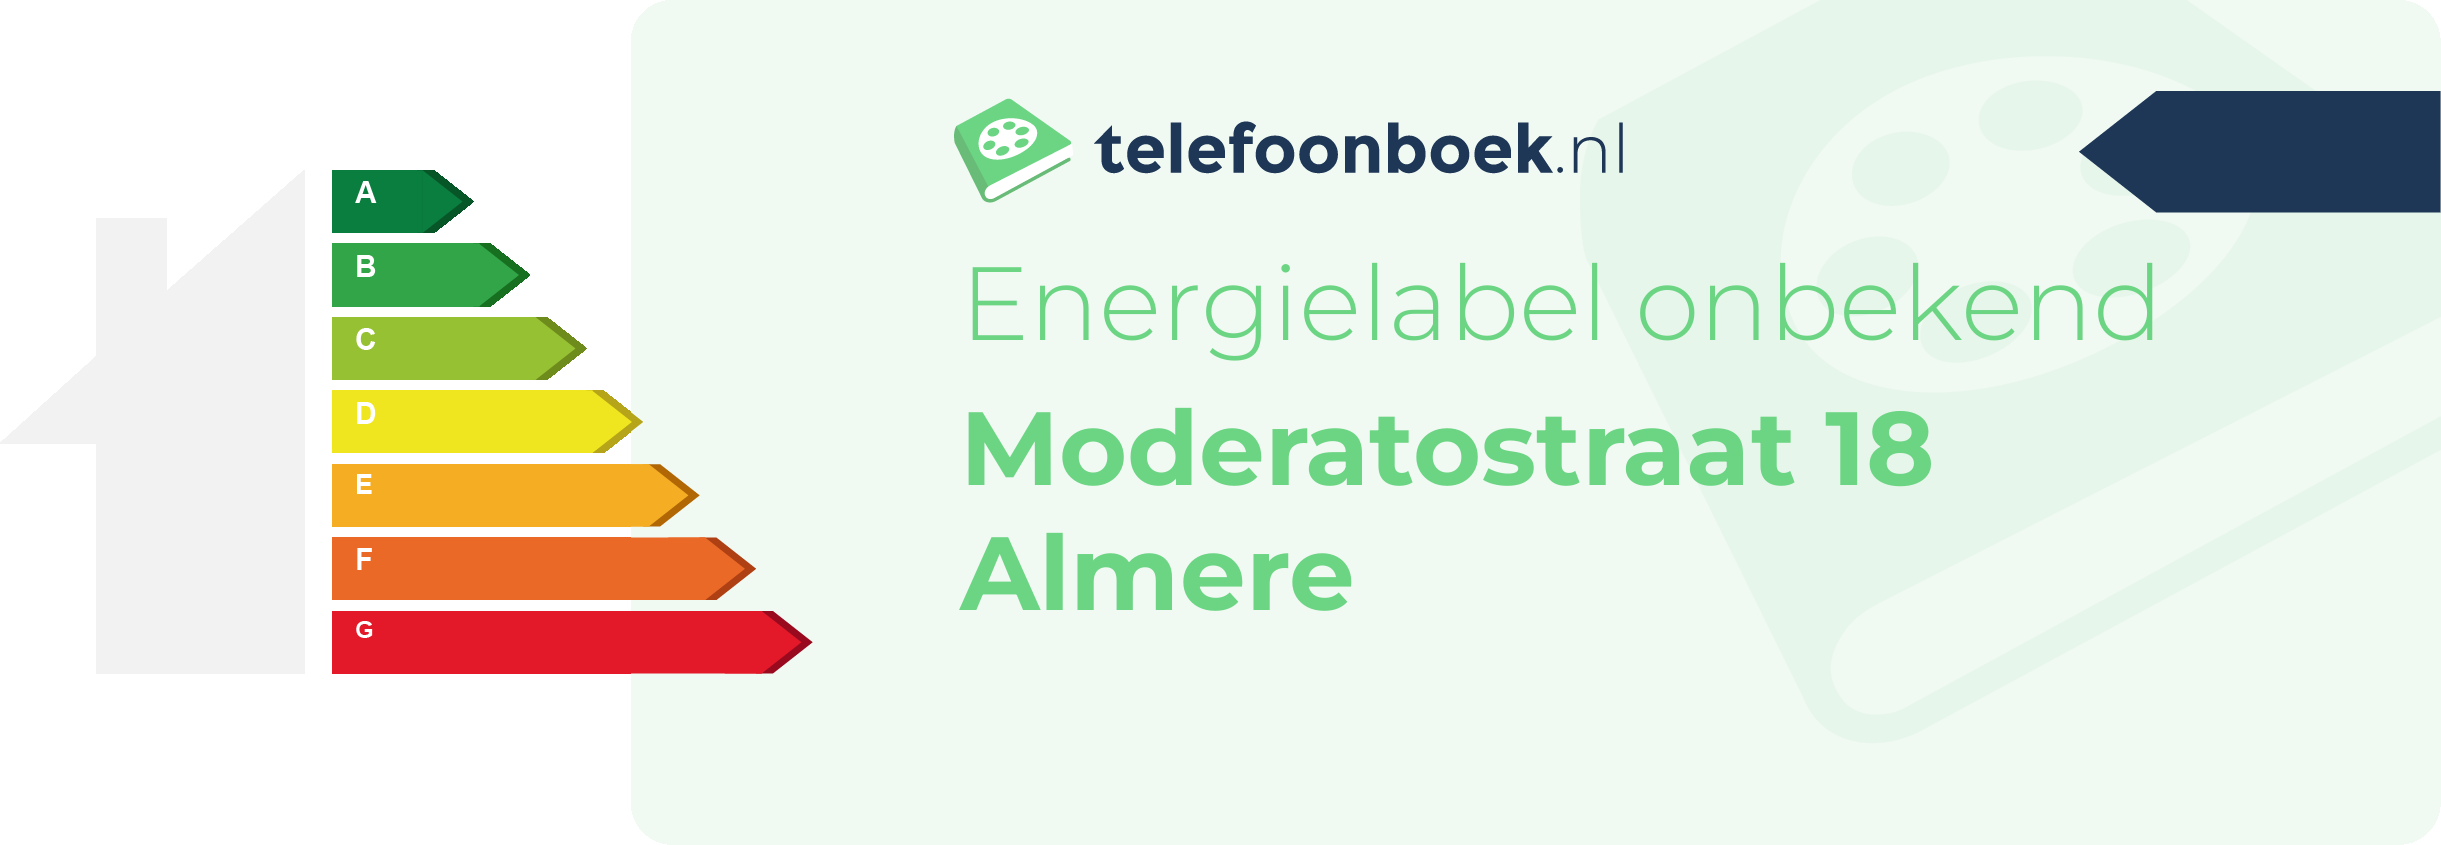 Energielabel Moderatostraat 18 Almere